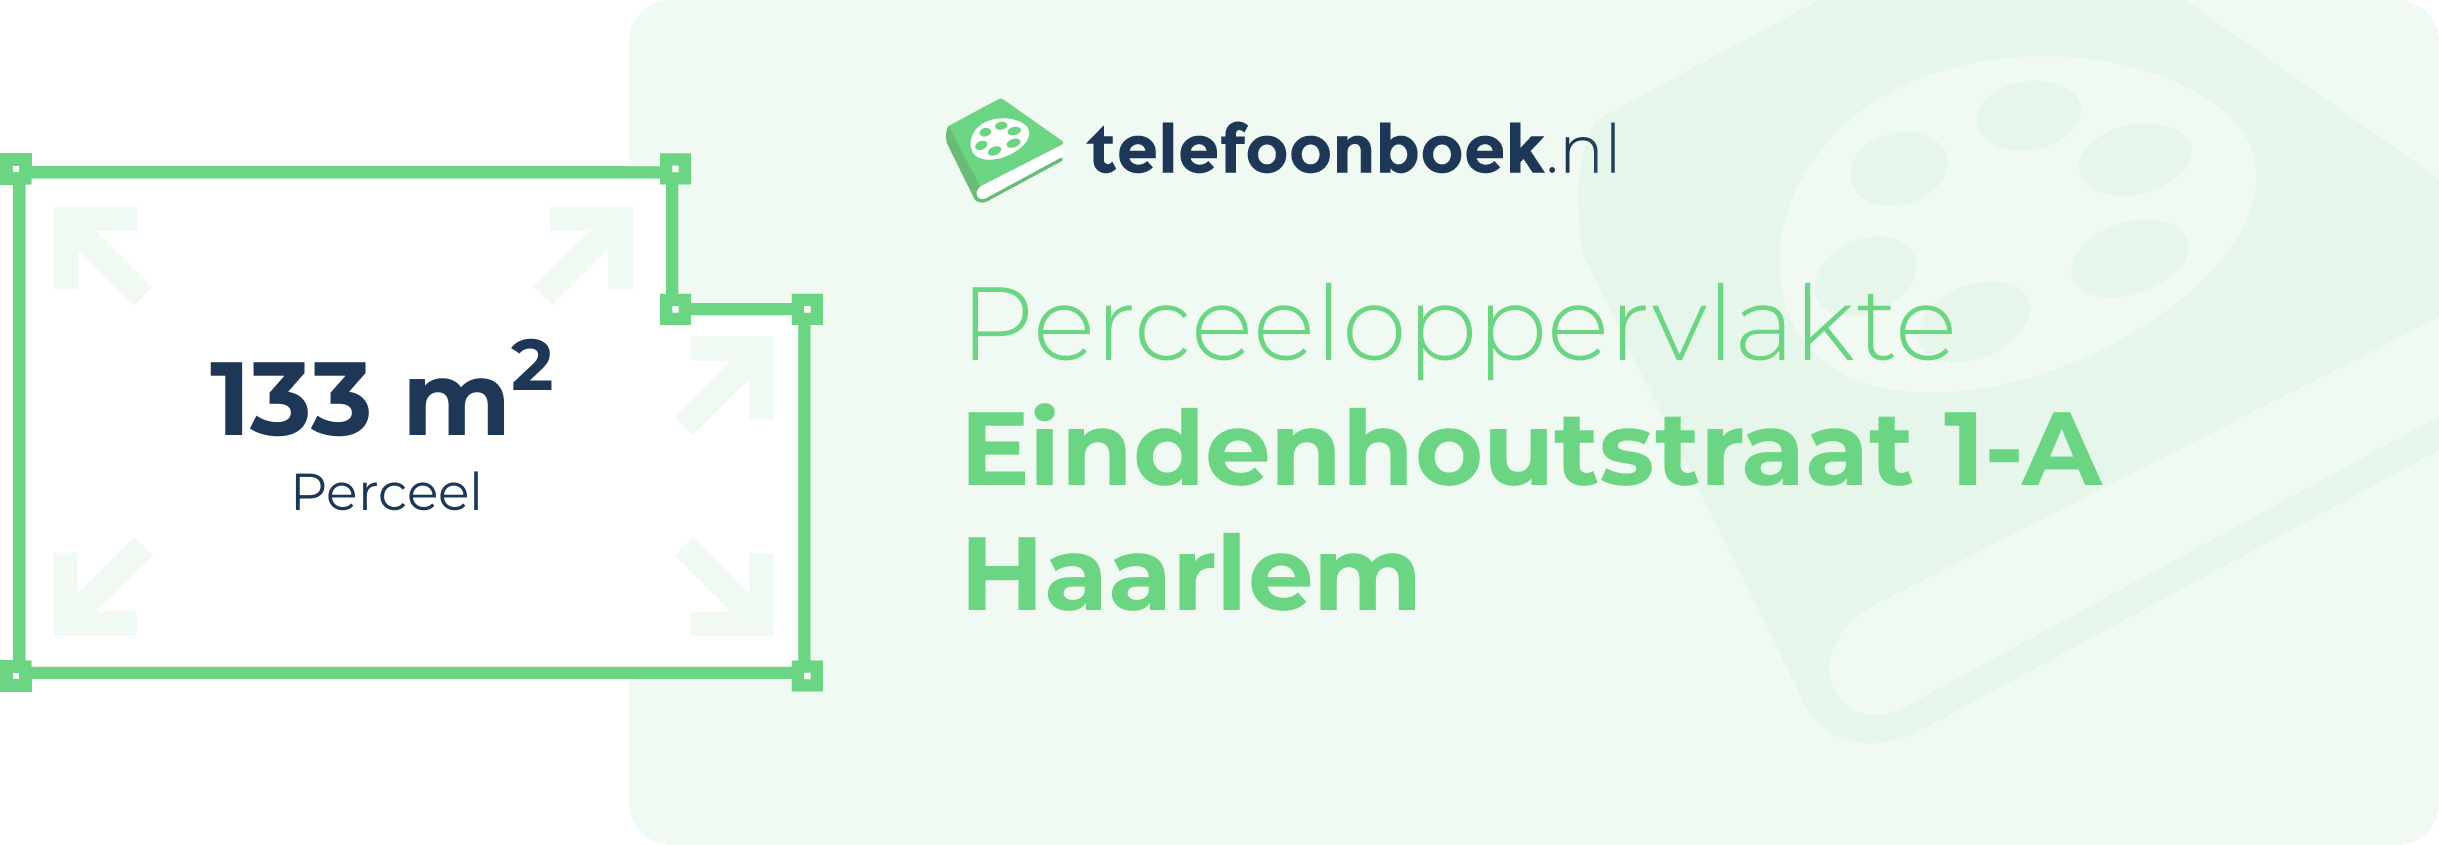 Perceeloppervlakte Eindenhoutstraat 1-A Haarlem